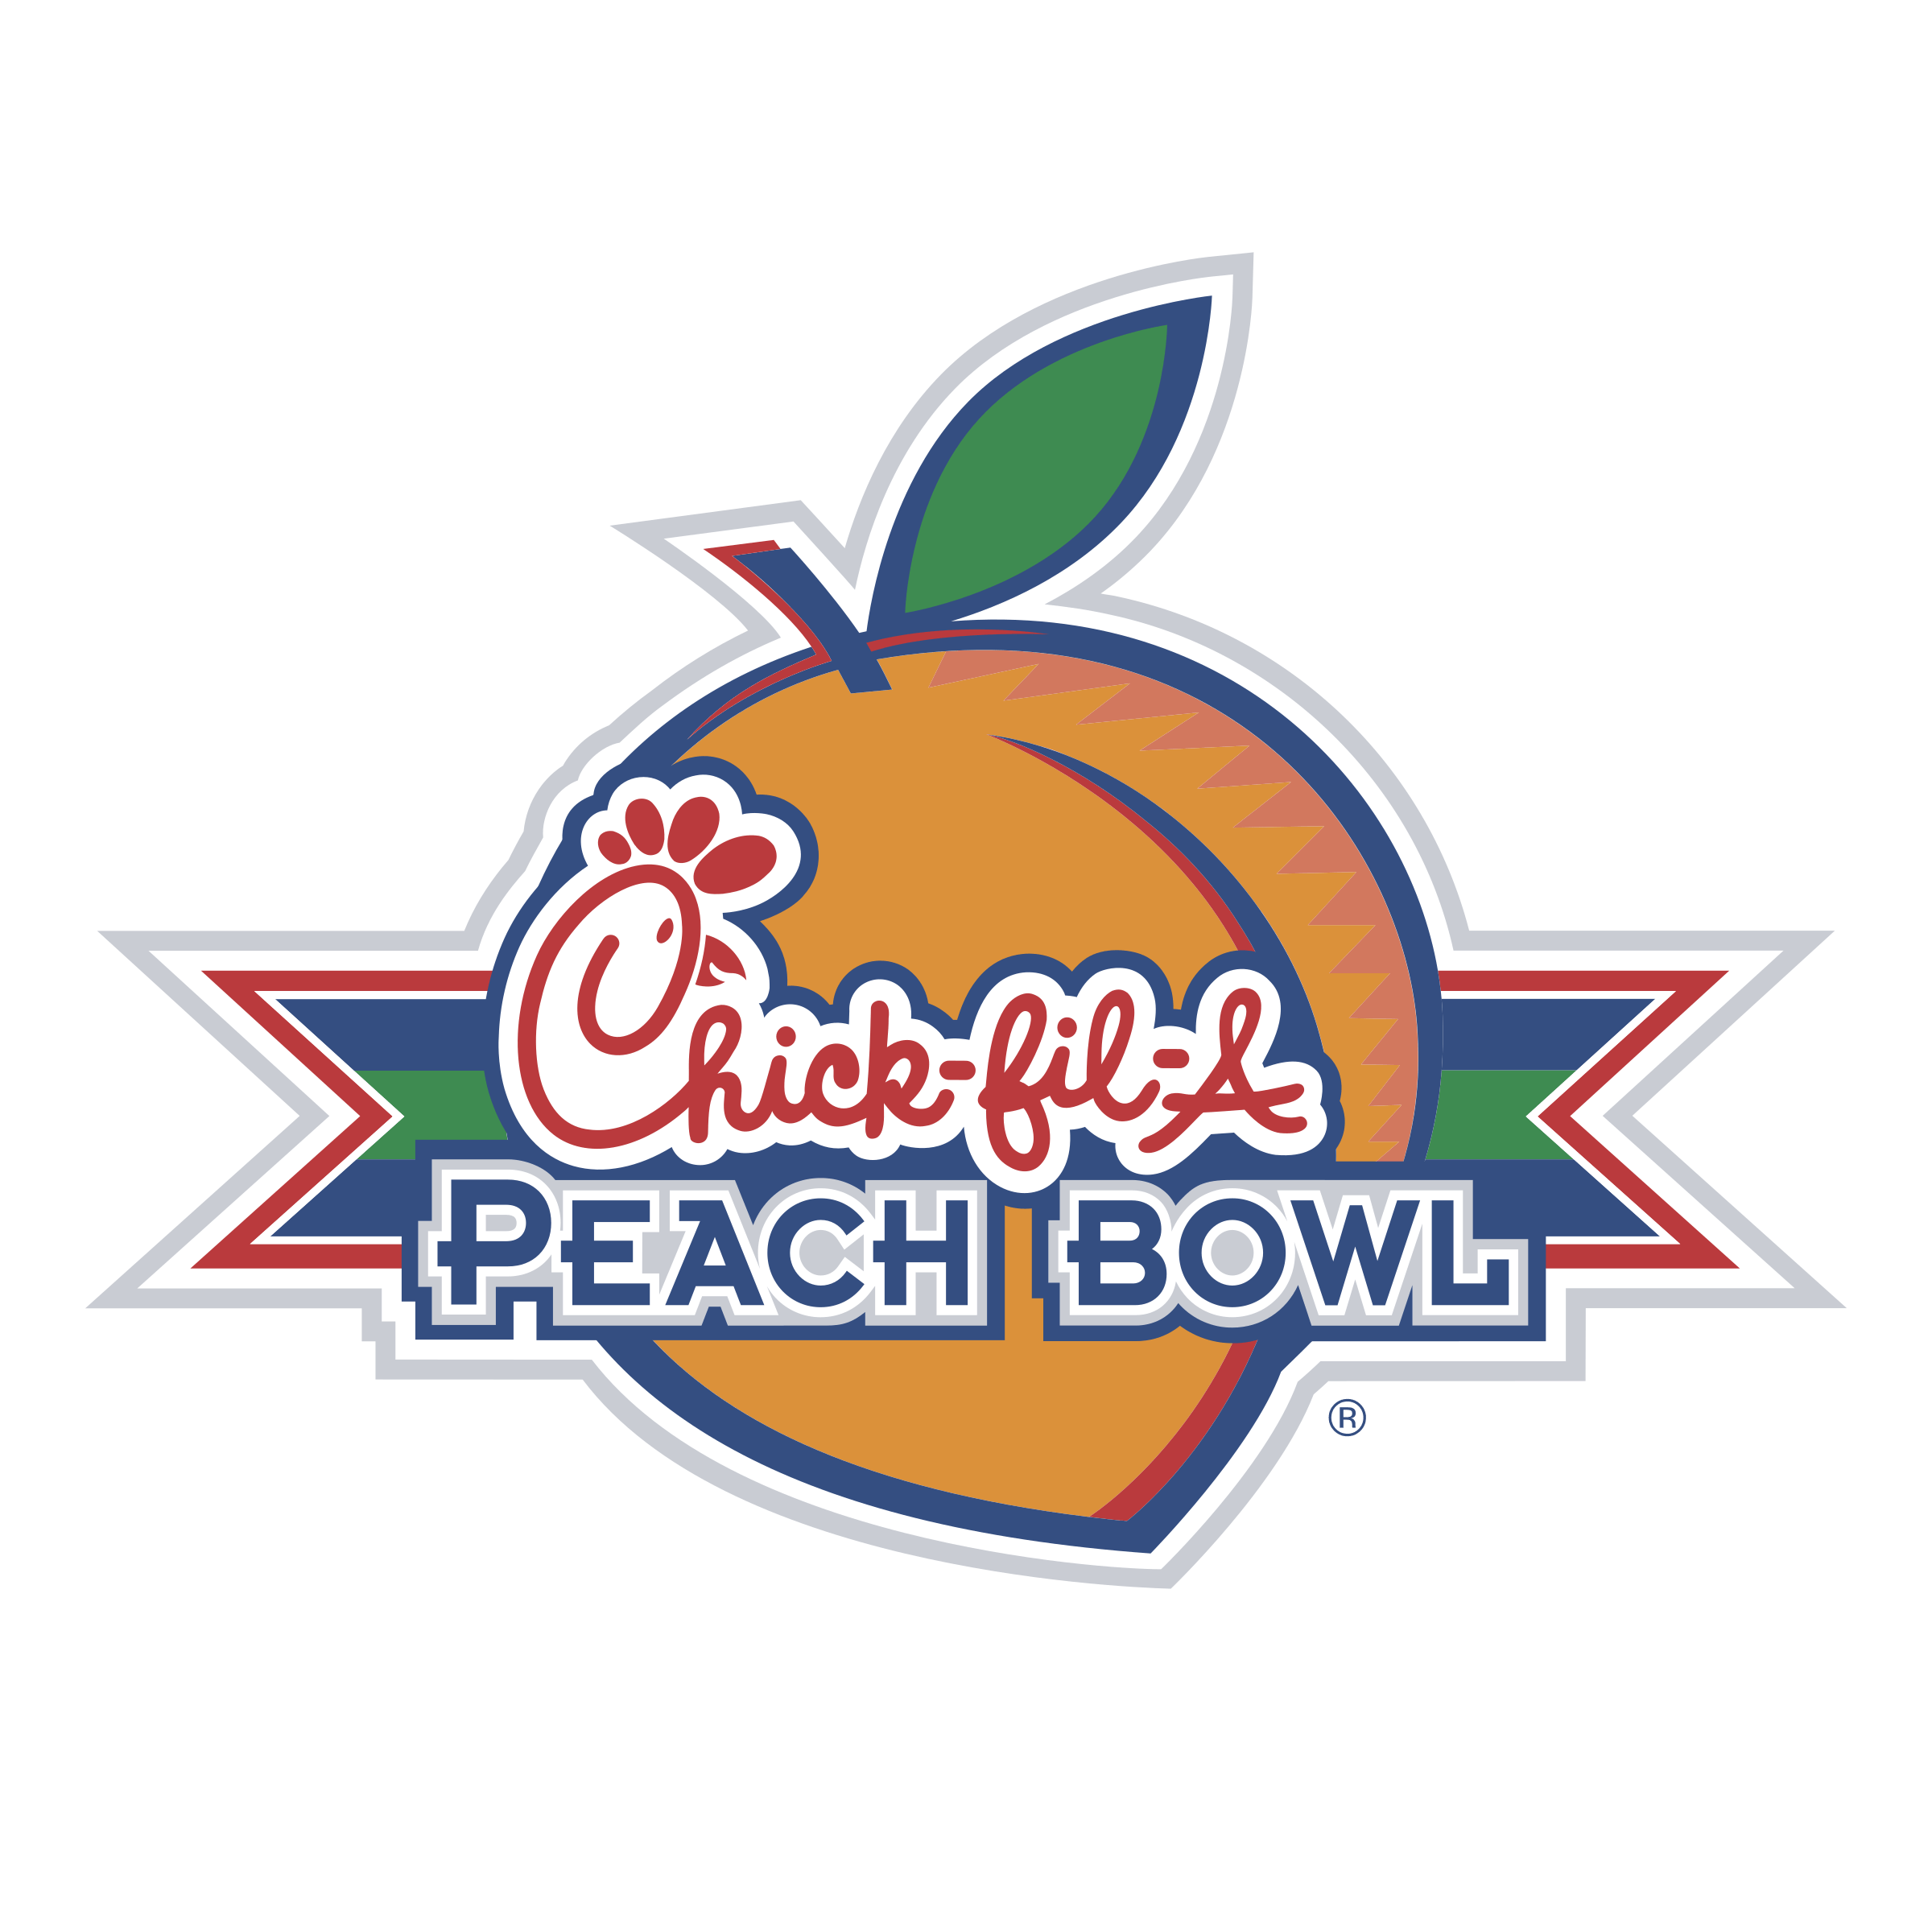 Peach Bowl Logo - Chick fil A Peach Bowl Logo PNG Transparent & SVG Vector - Freebie ...